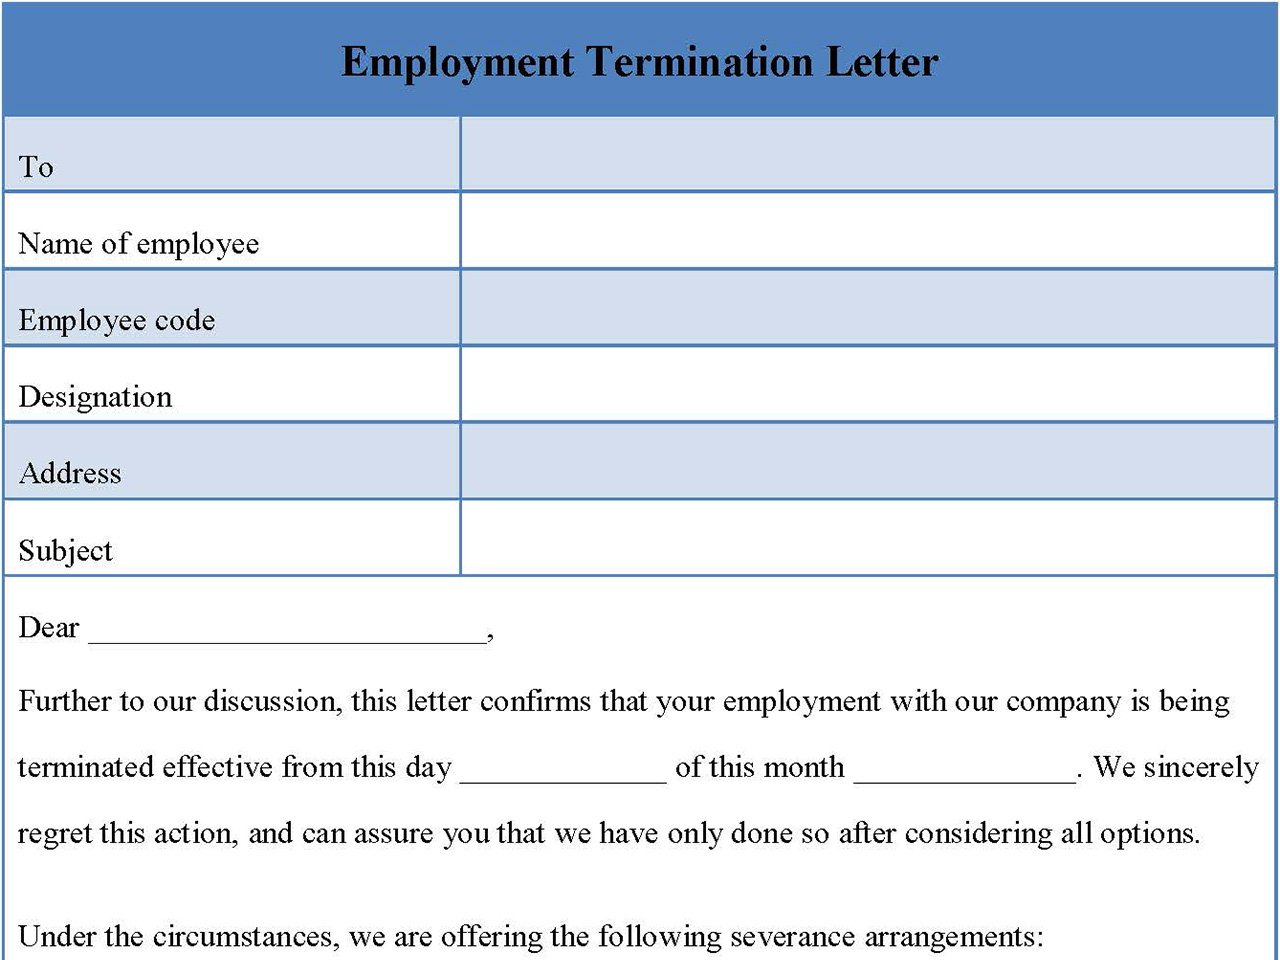 Employment Termination Letter Form